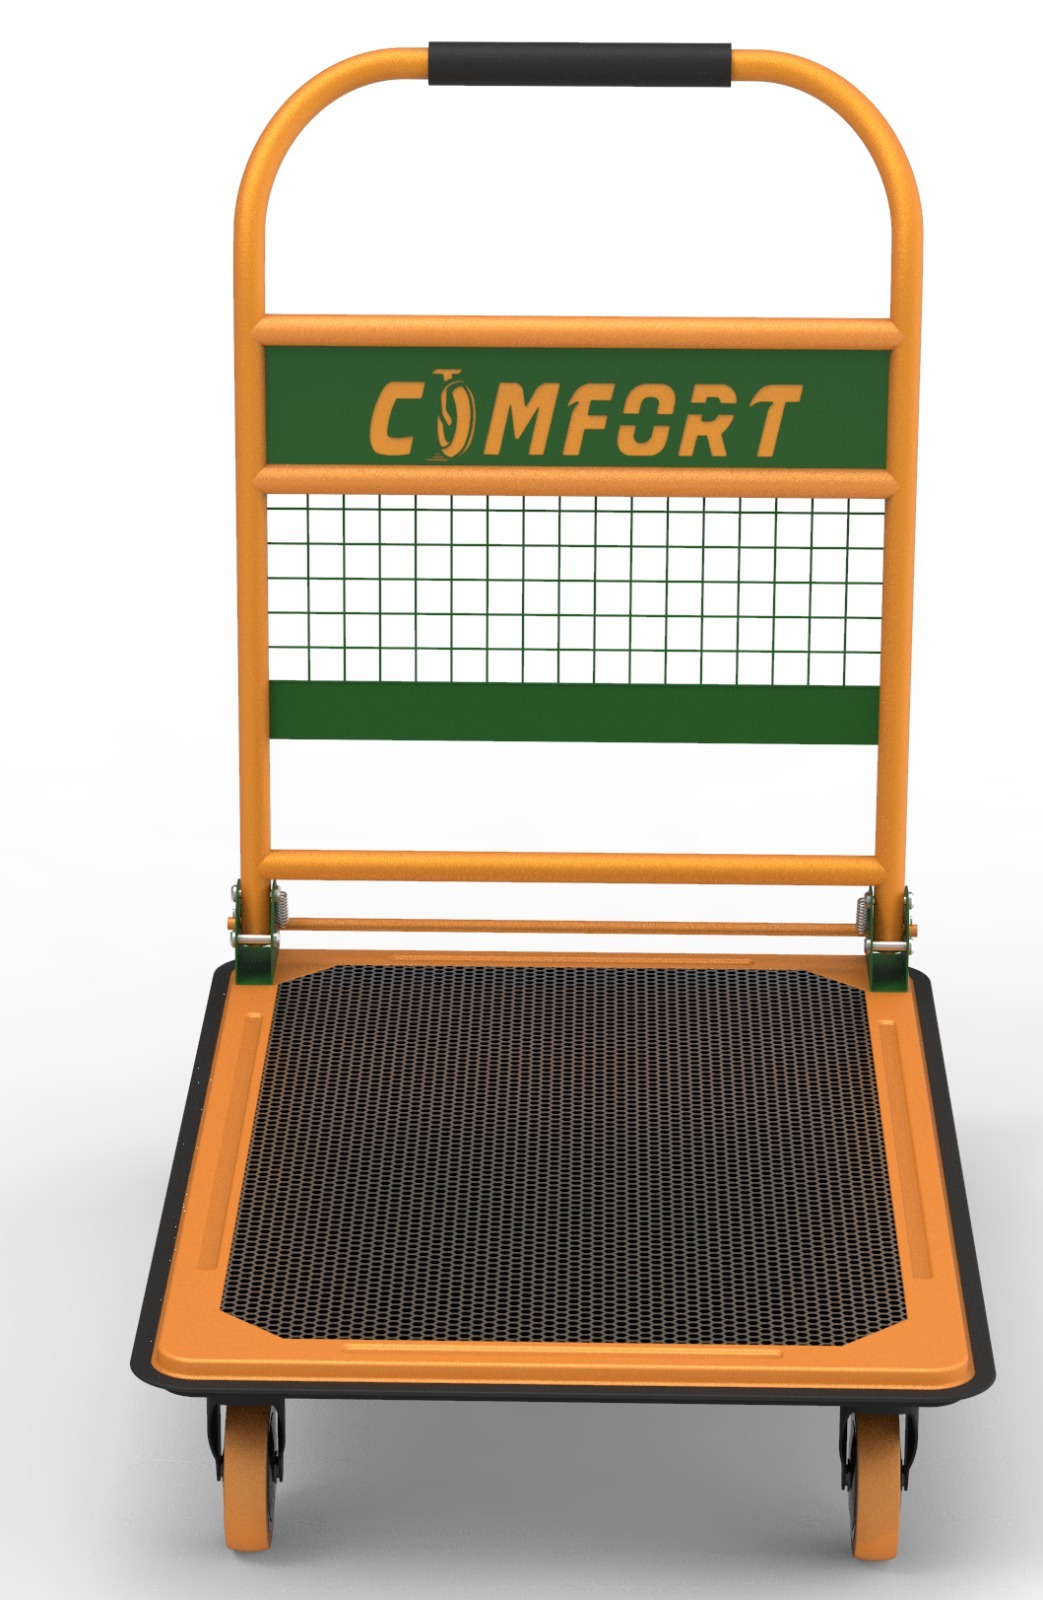 Comfort castors | About us | Castor wheel manufacturing company